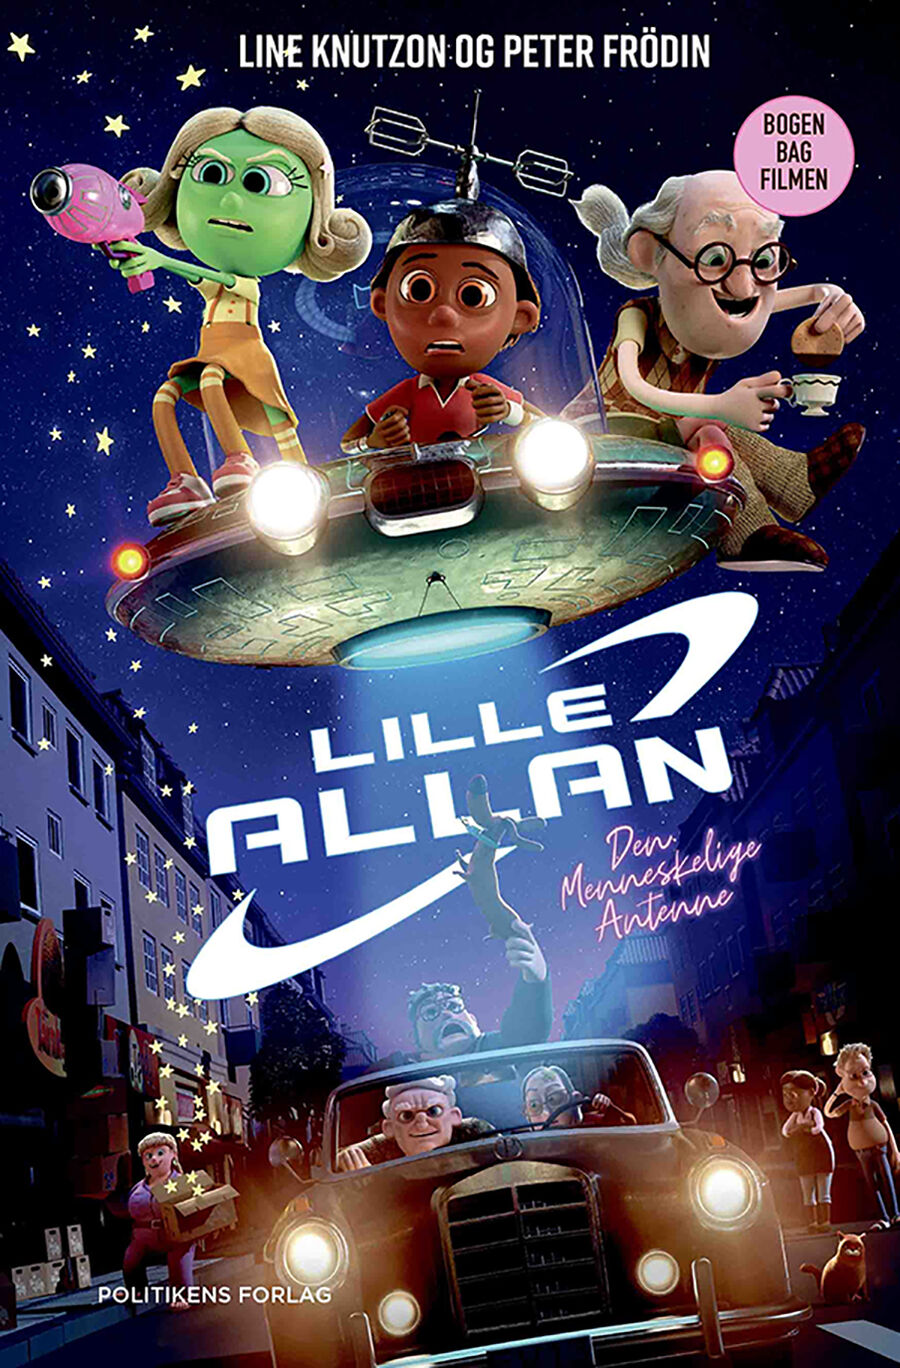 Bogen bag filmen 'Lille Allan - den menneskelige antenne'. Reservér den på biblioteket